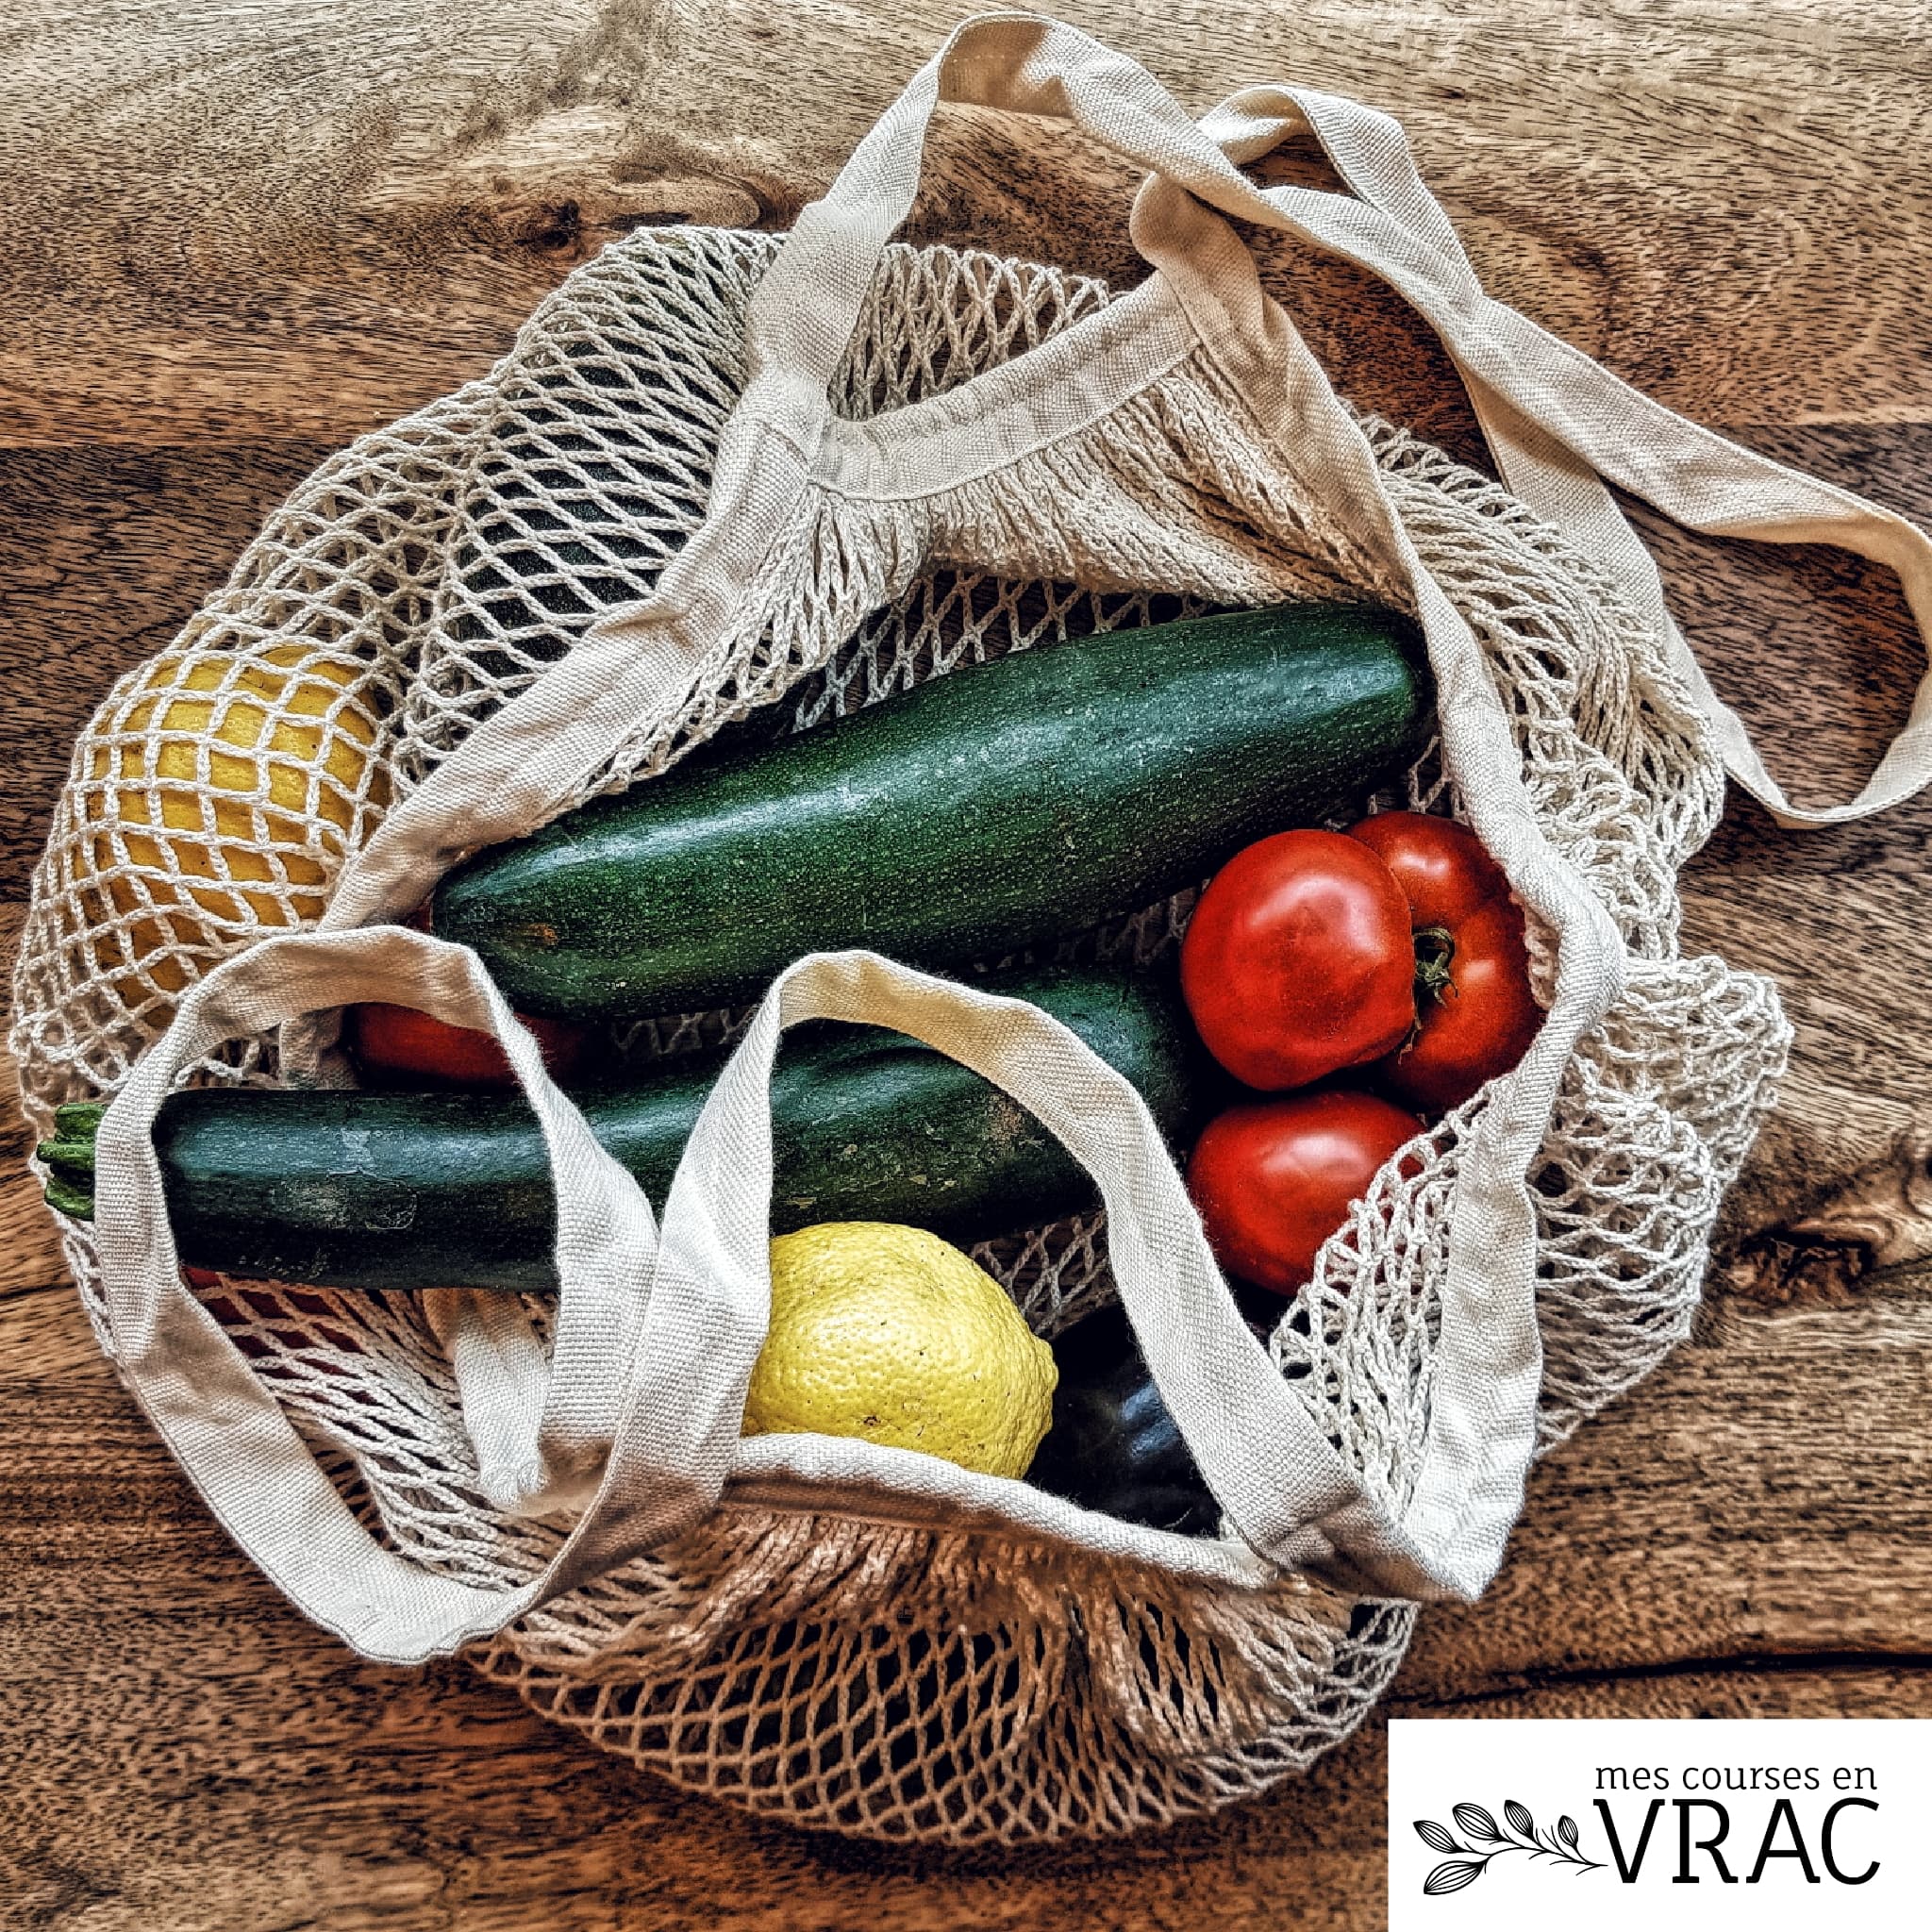 Sac filet, sac à provision grandes anses, filet à provisions légumes